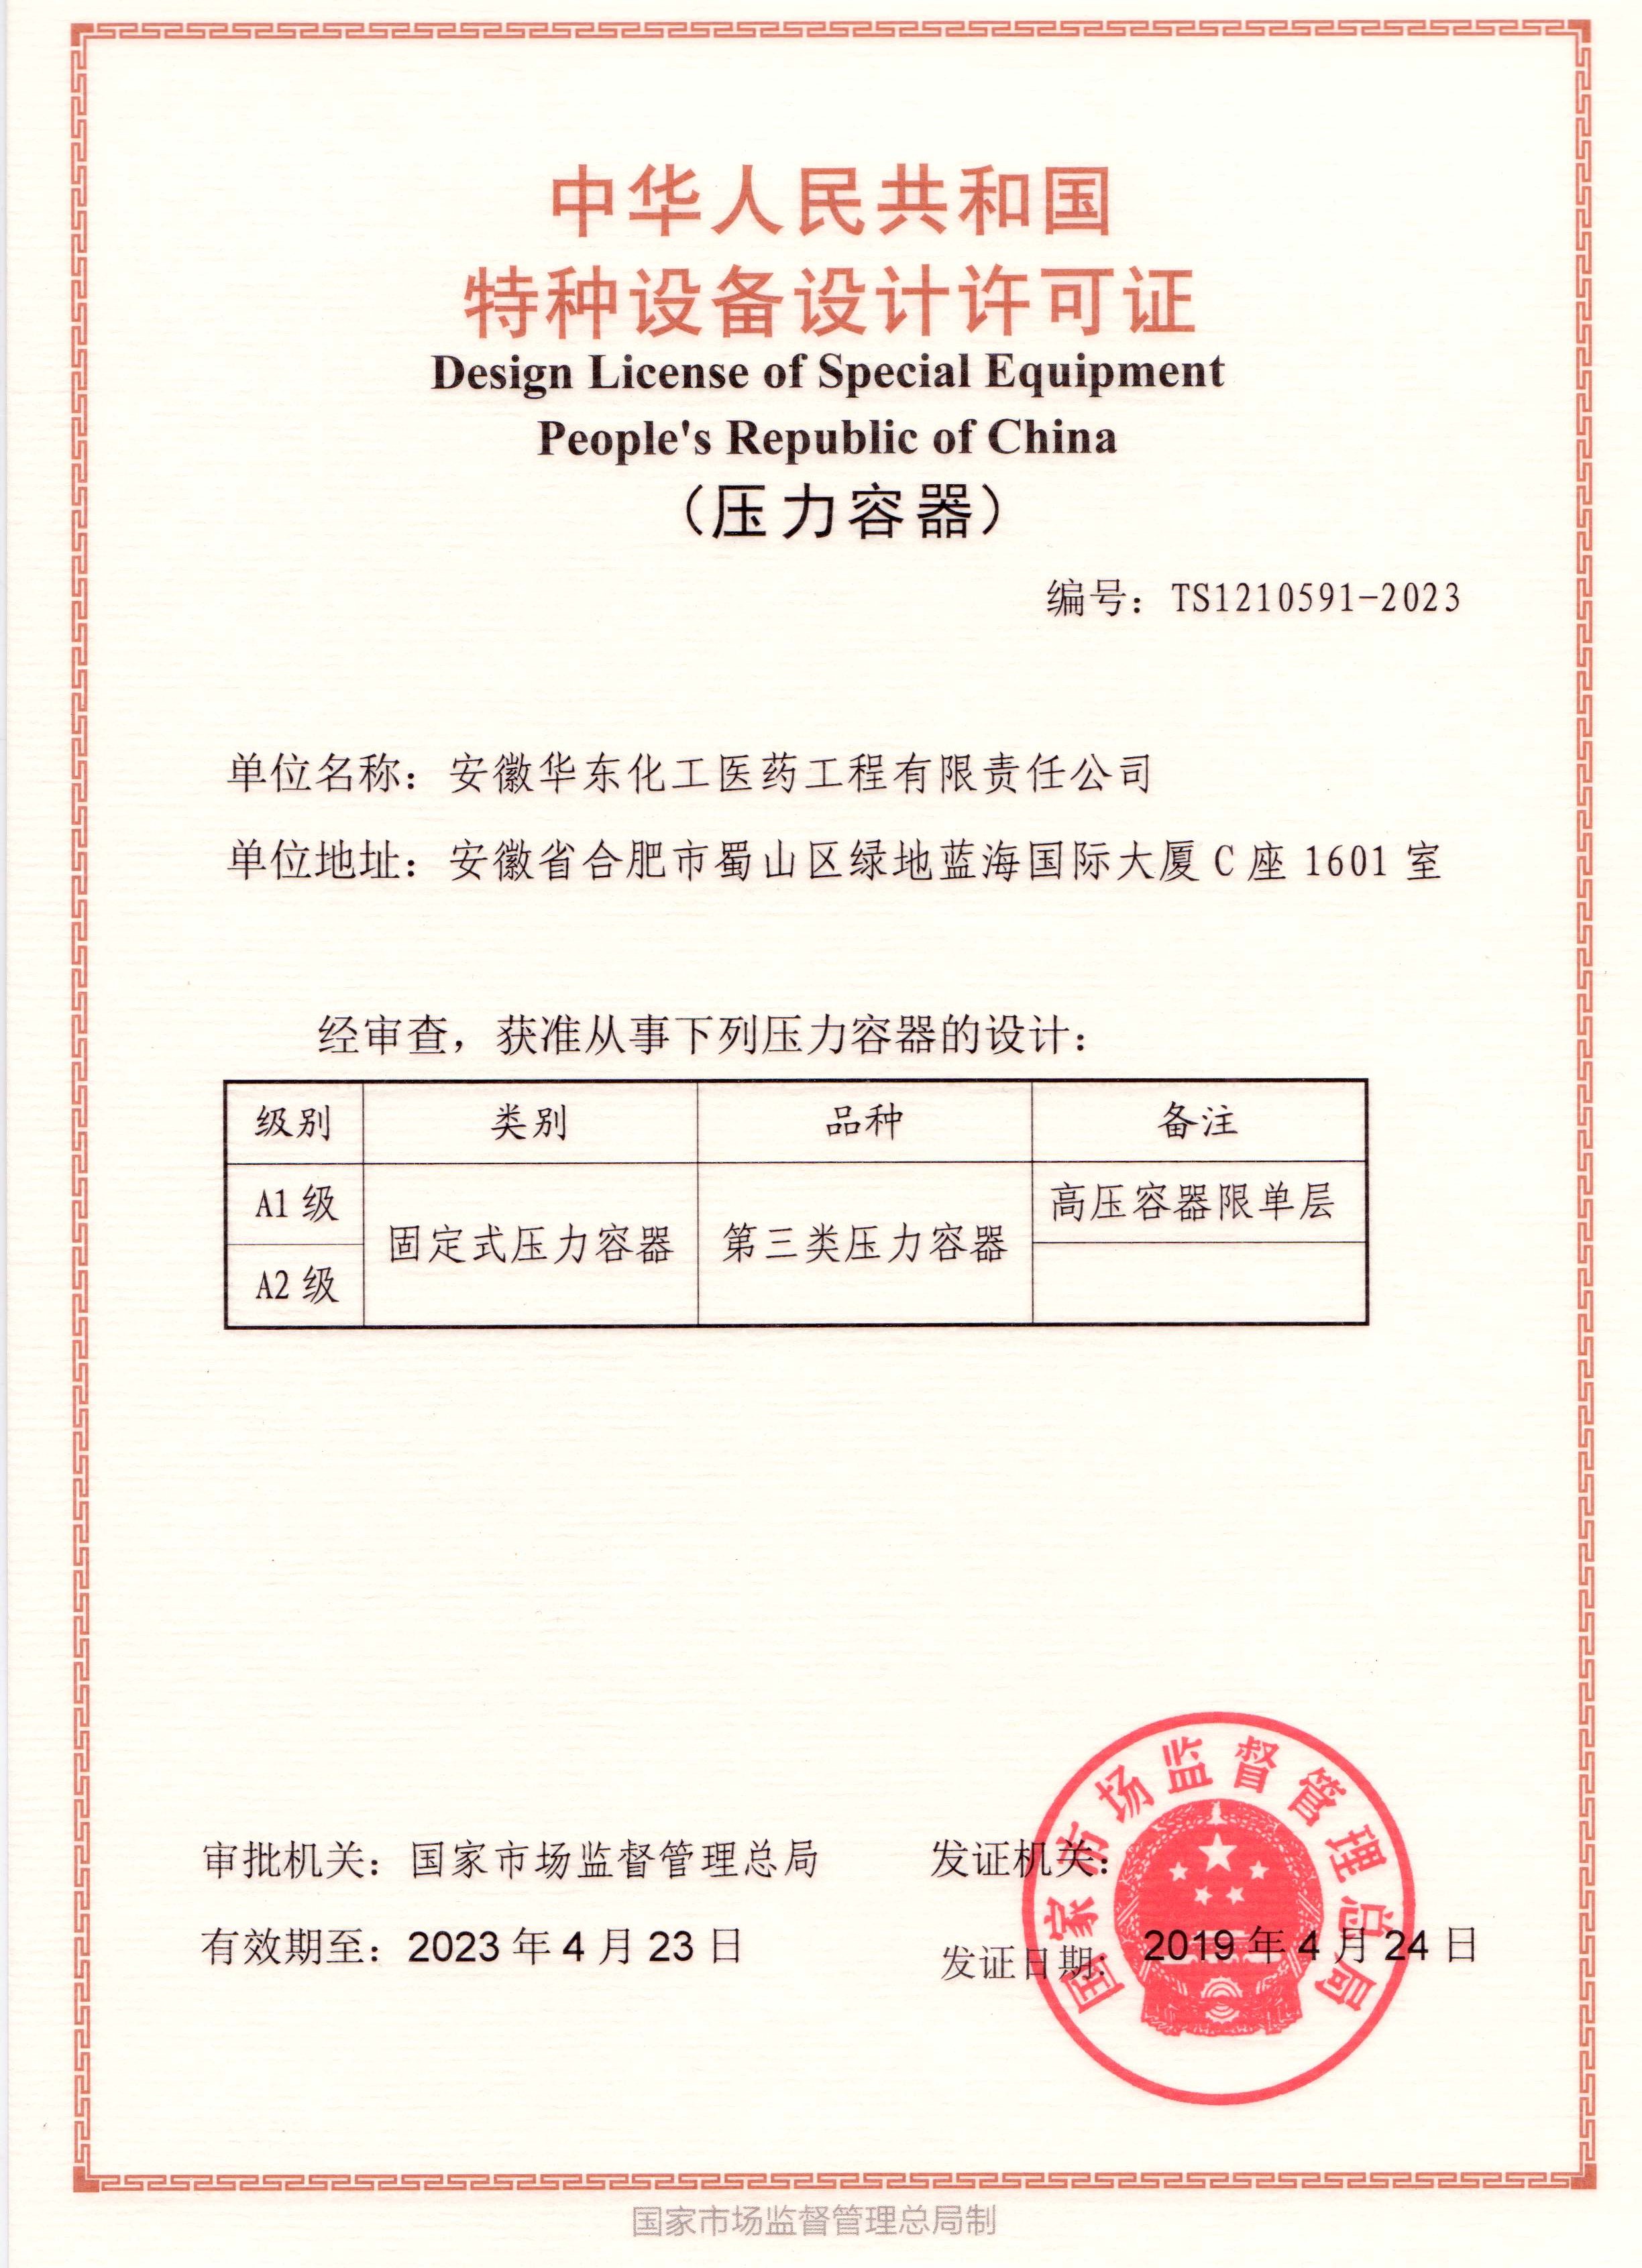 Design License of Special Equipment(Pressure Vessel)